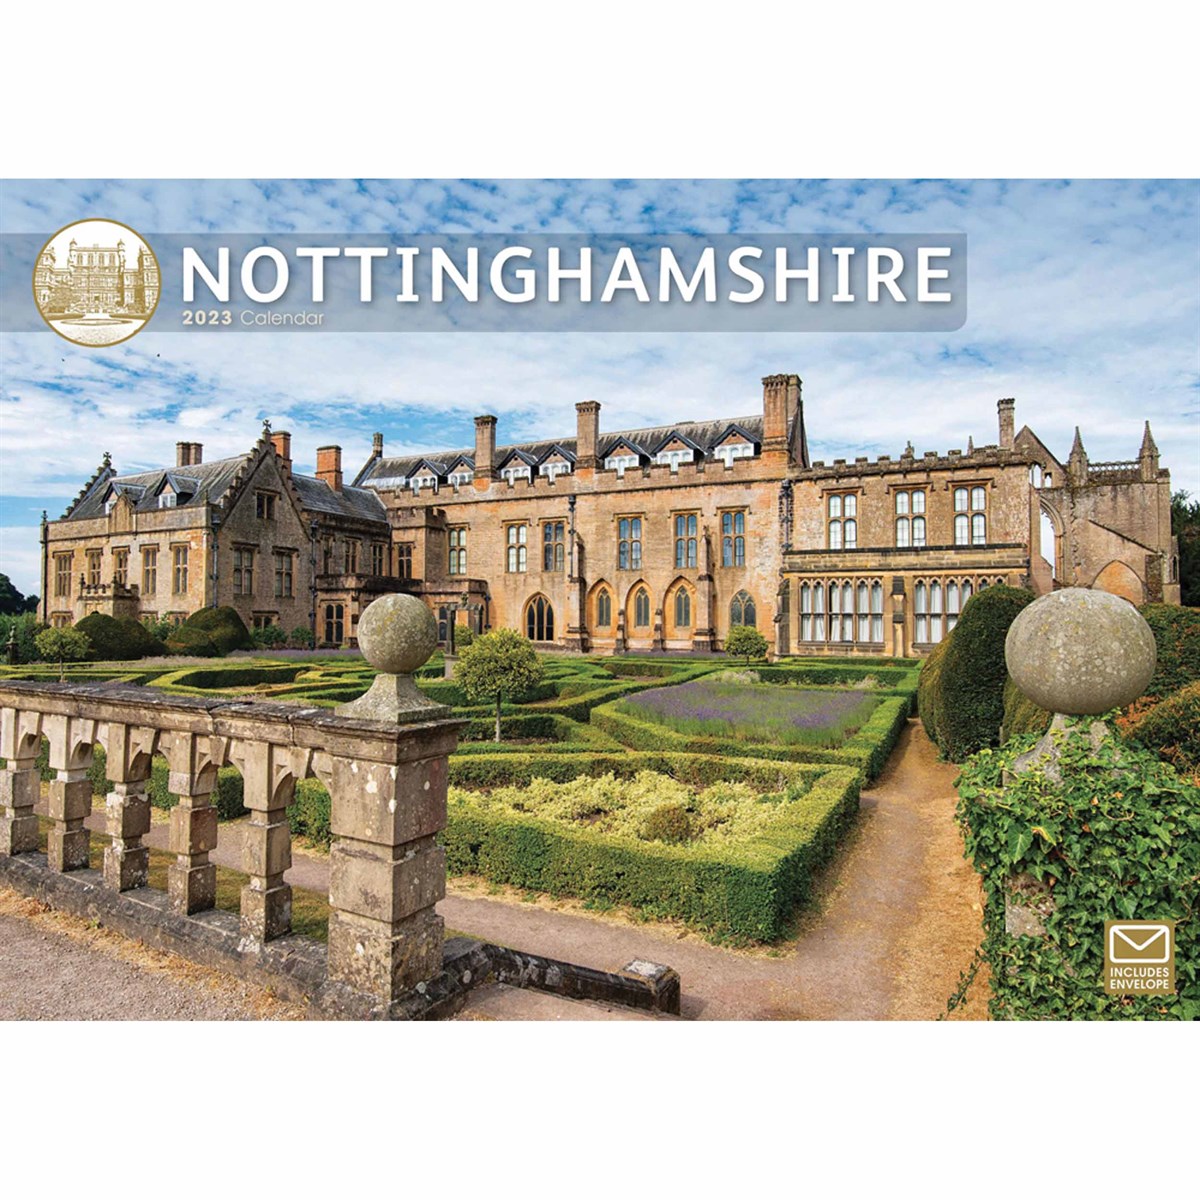 Nottinghamshire A4 2023 Calendars